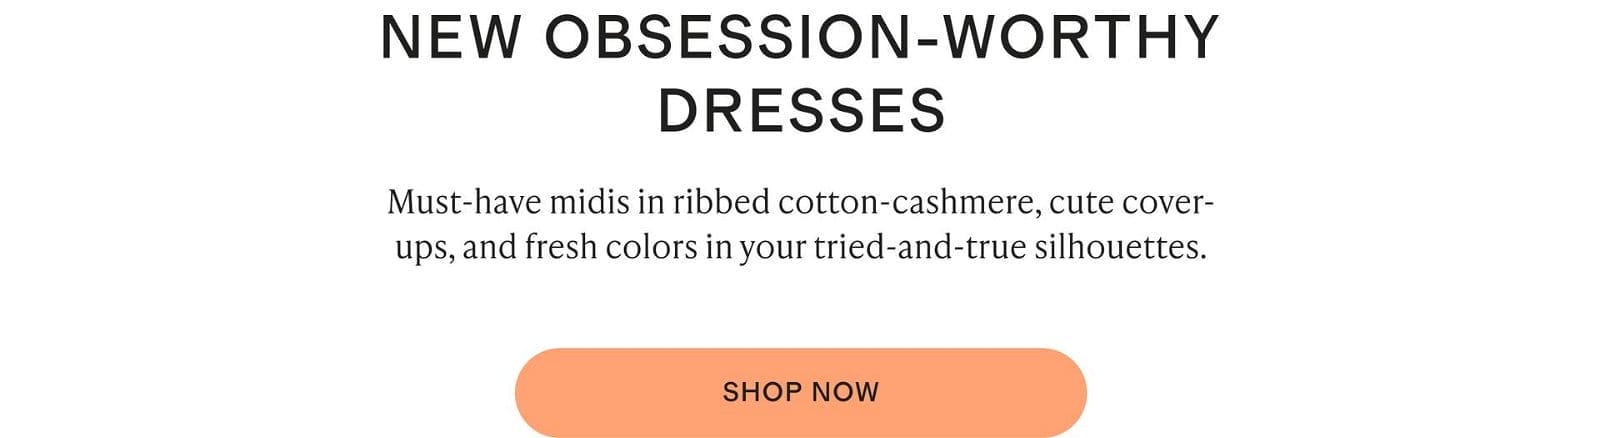 NEW OBSESSION-WORTHY DRESSES